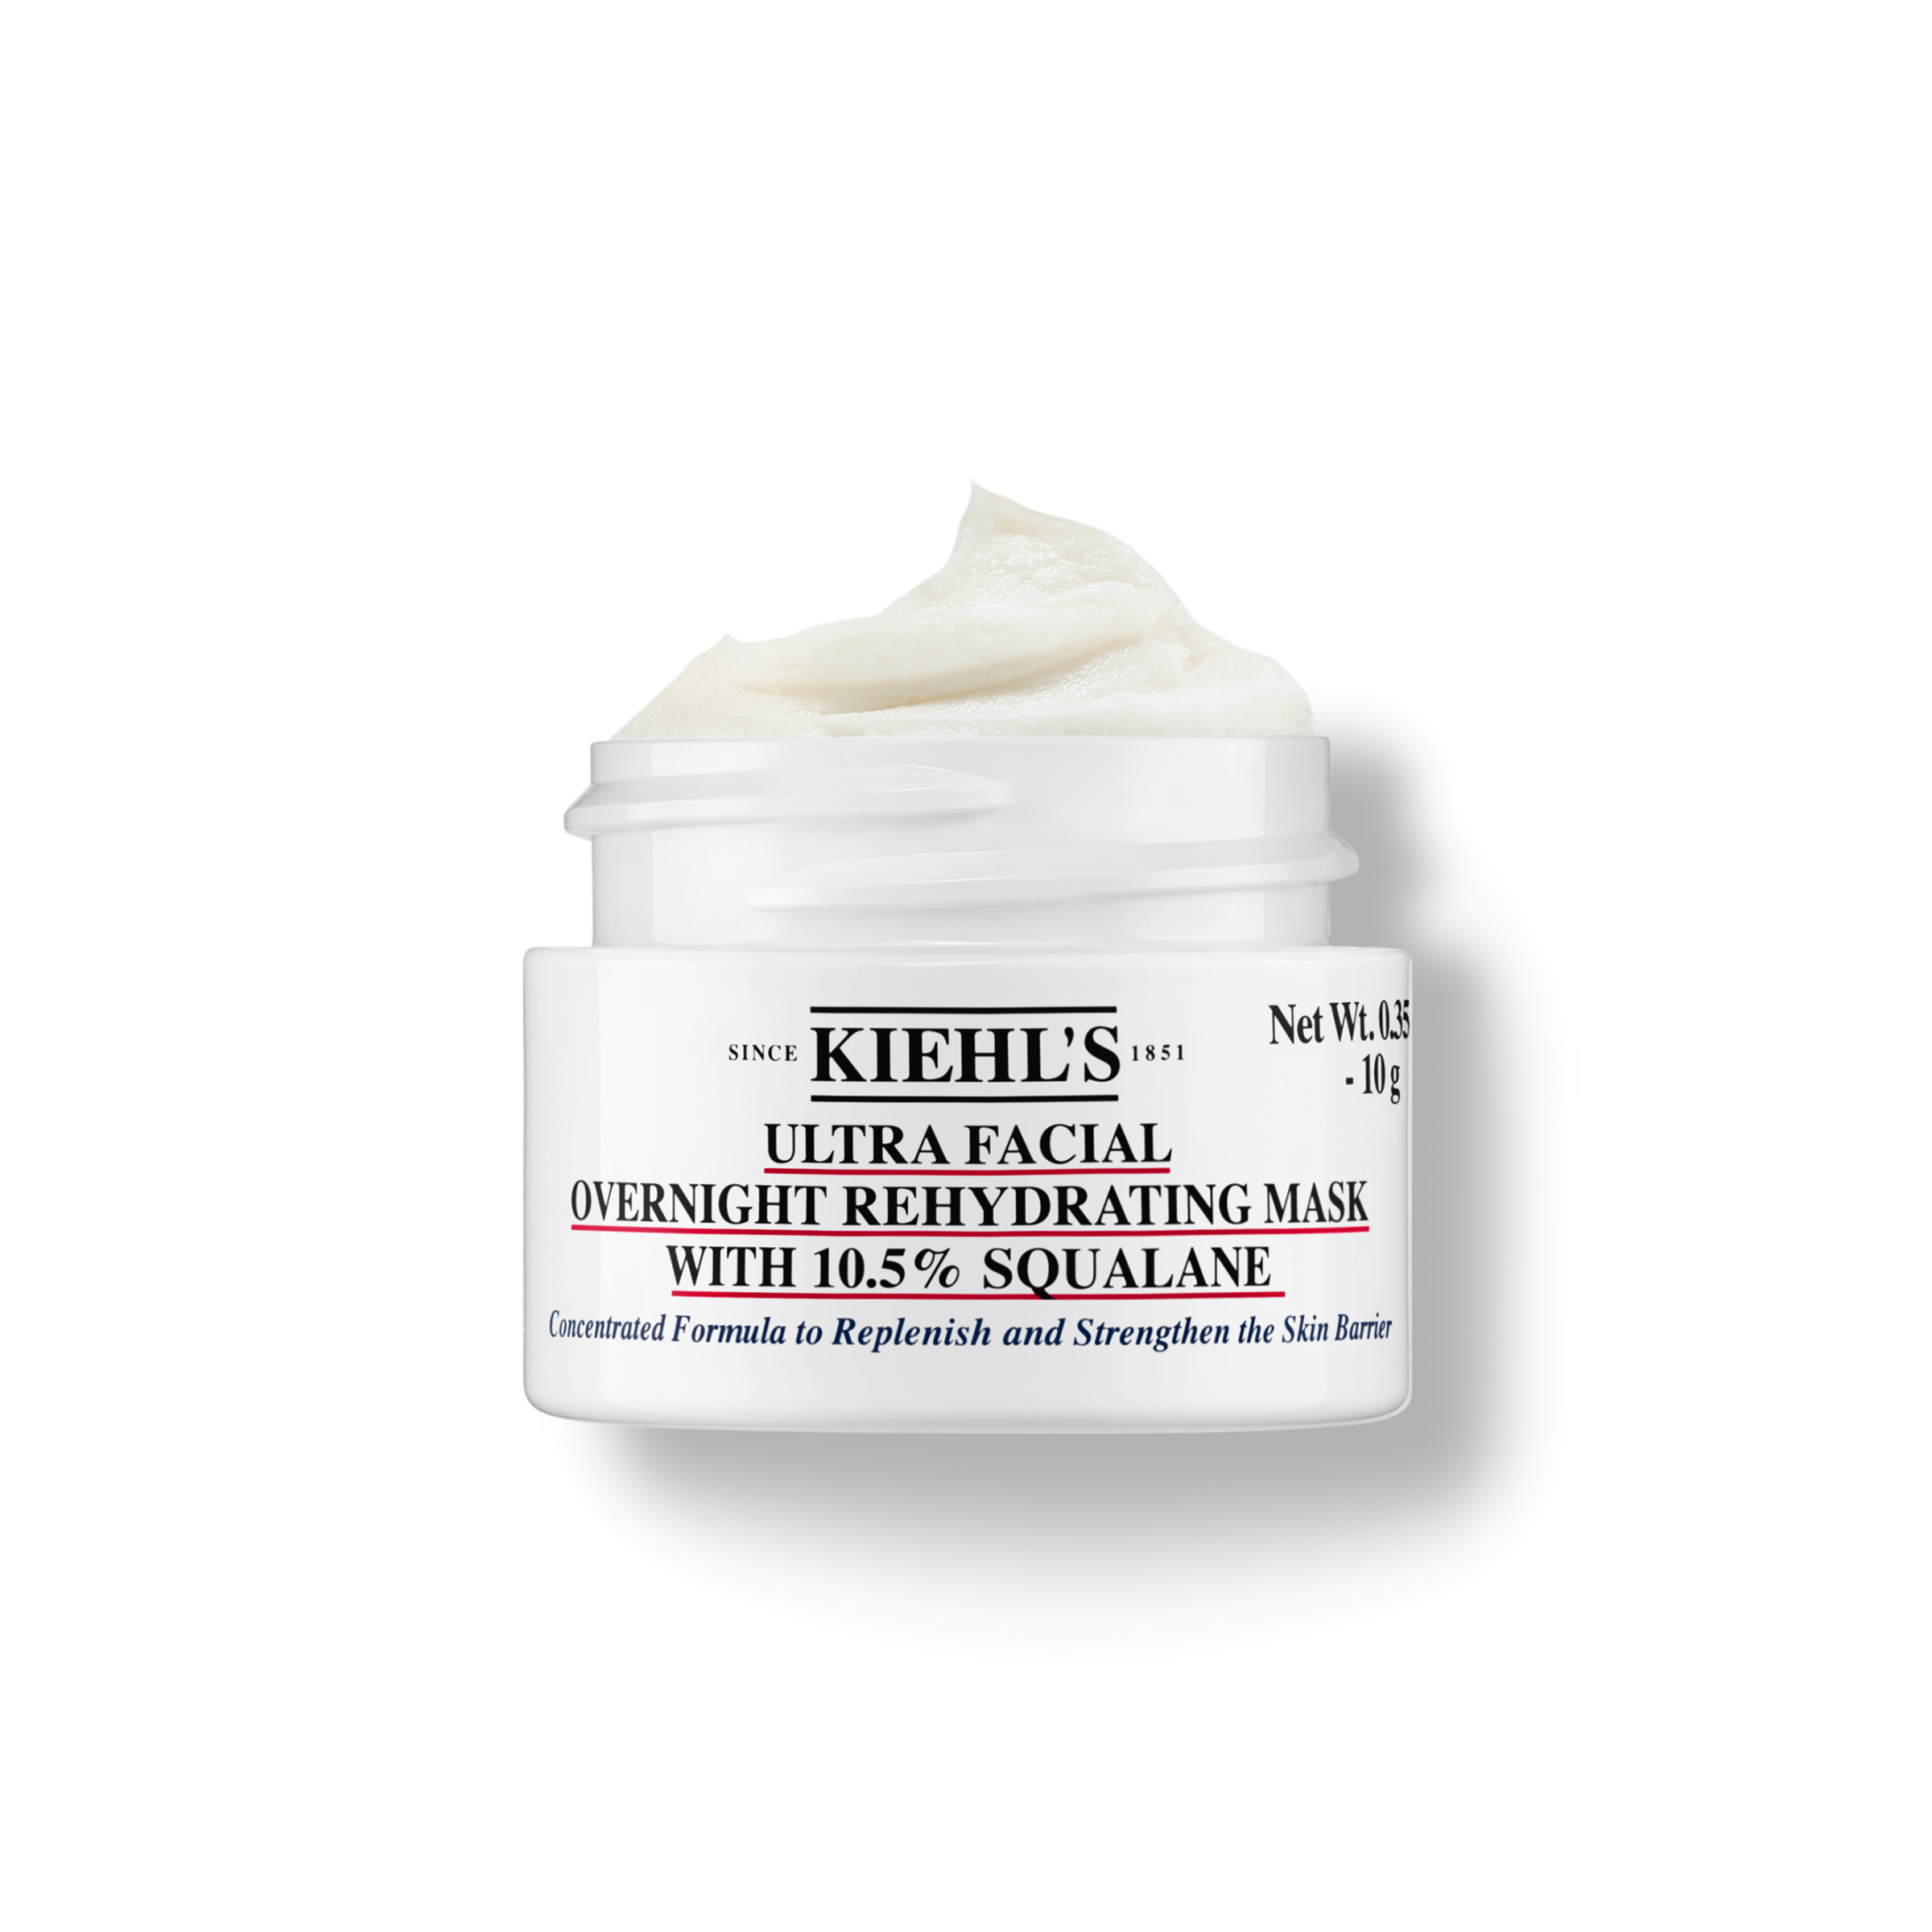 Kiehl's Ultra Facial Overnight Rehydrating maszk 10% squalane-nal